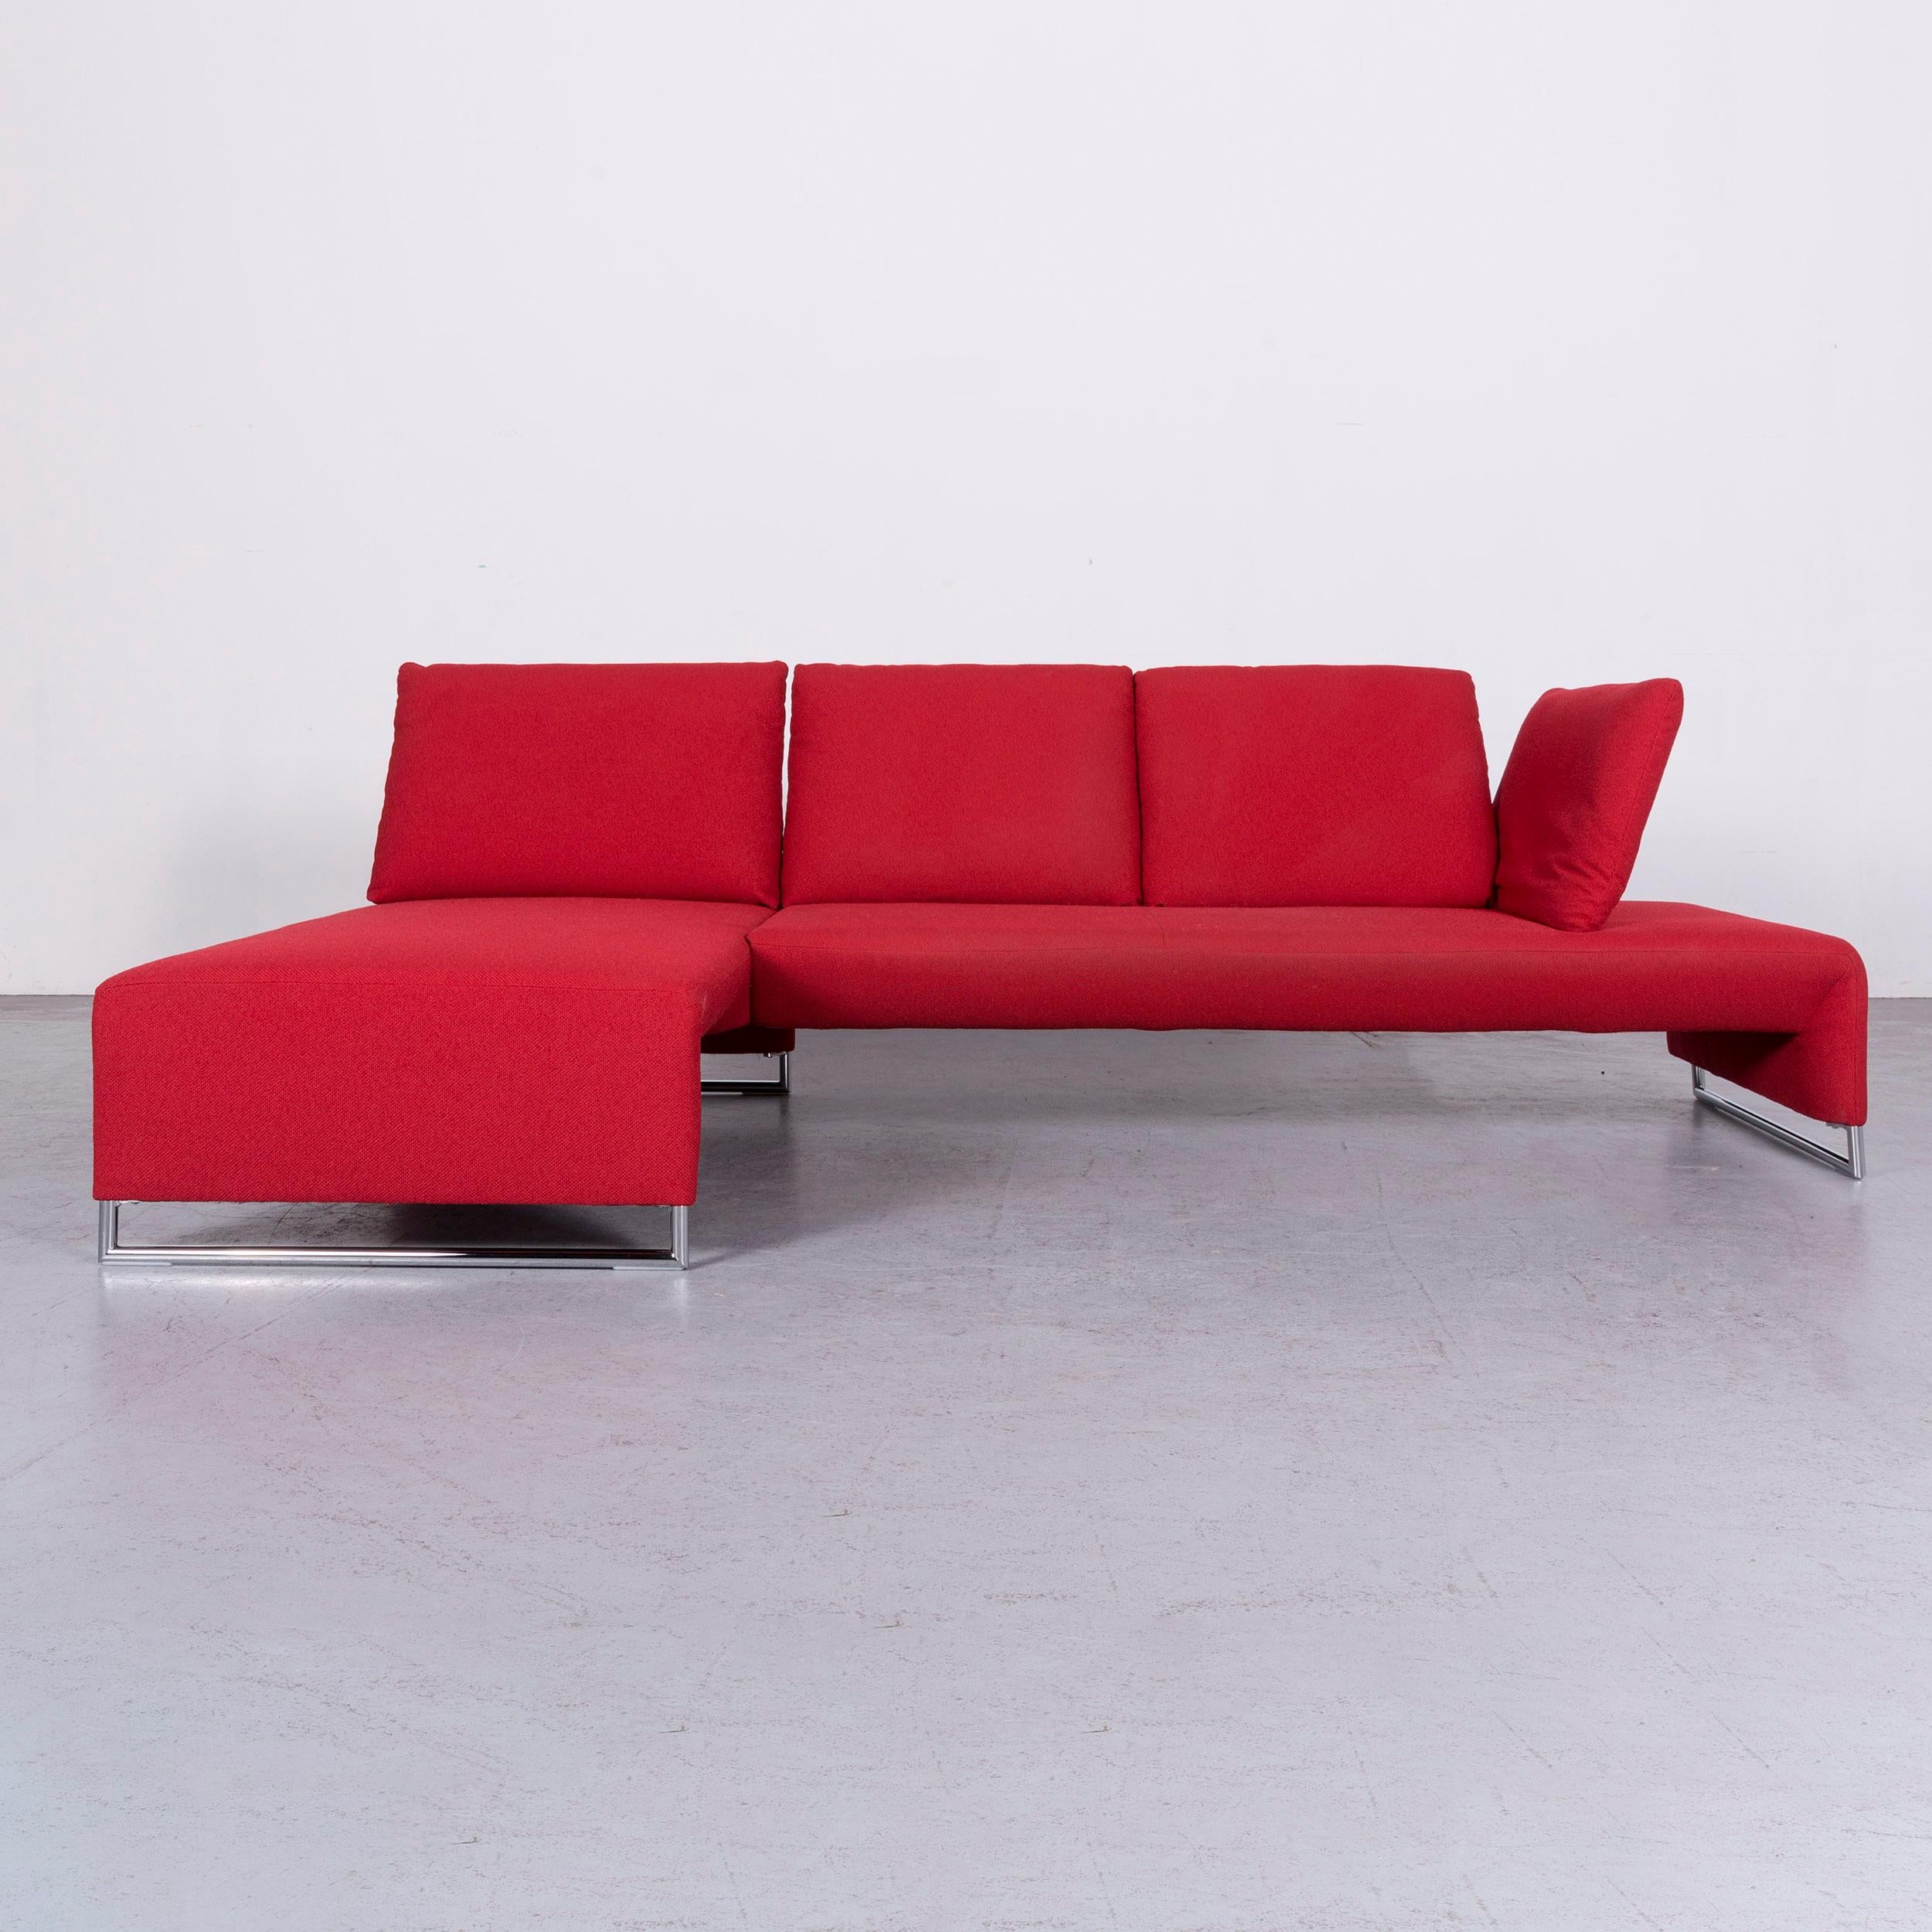 Koinor Designer Fabric Sofa in Red Corner, Sofa Couch In Good Condition For Sale In Cologne, DE